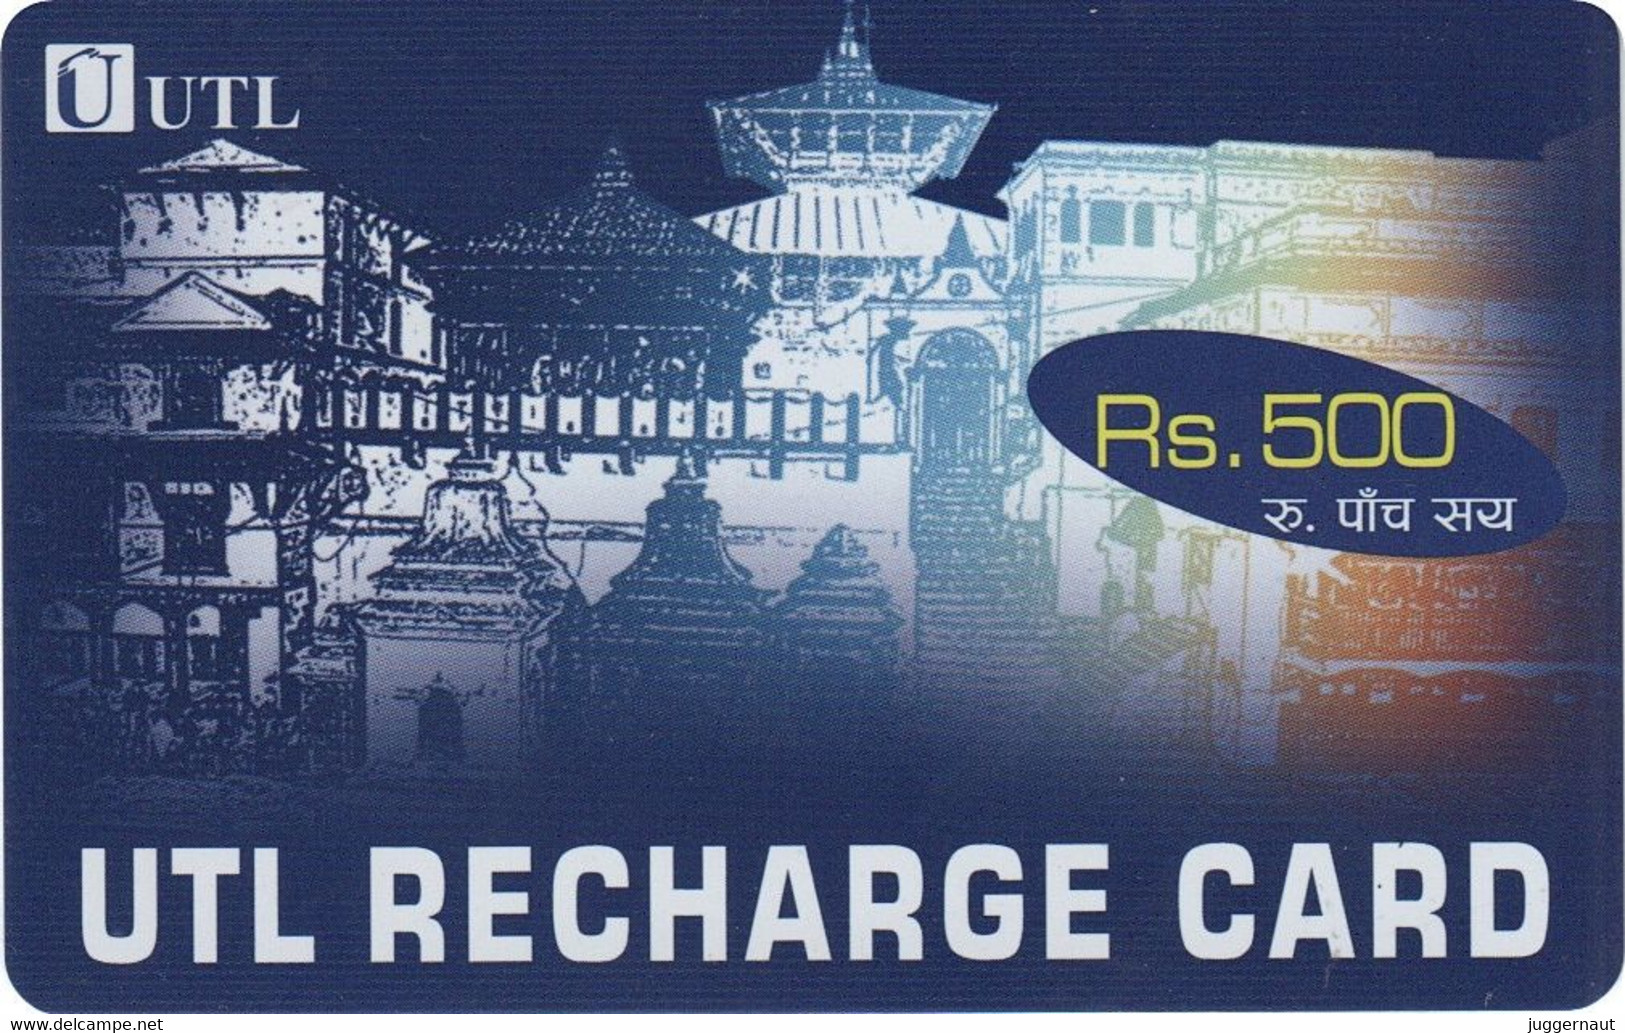 CDMA MOBILE PHONE PREPAID Used RECHARGE CARD Rs.500 UTL MOBILE NEPAL - Nepal